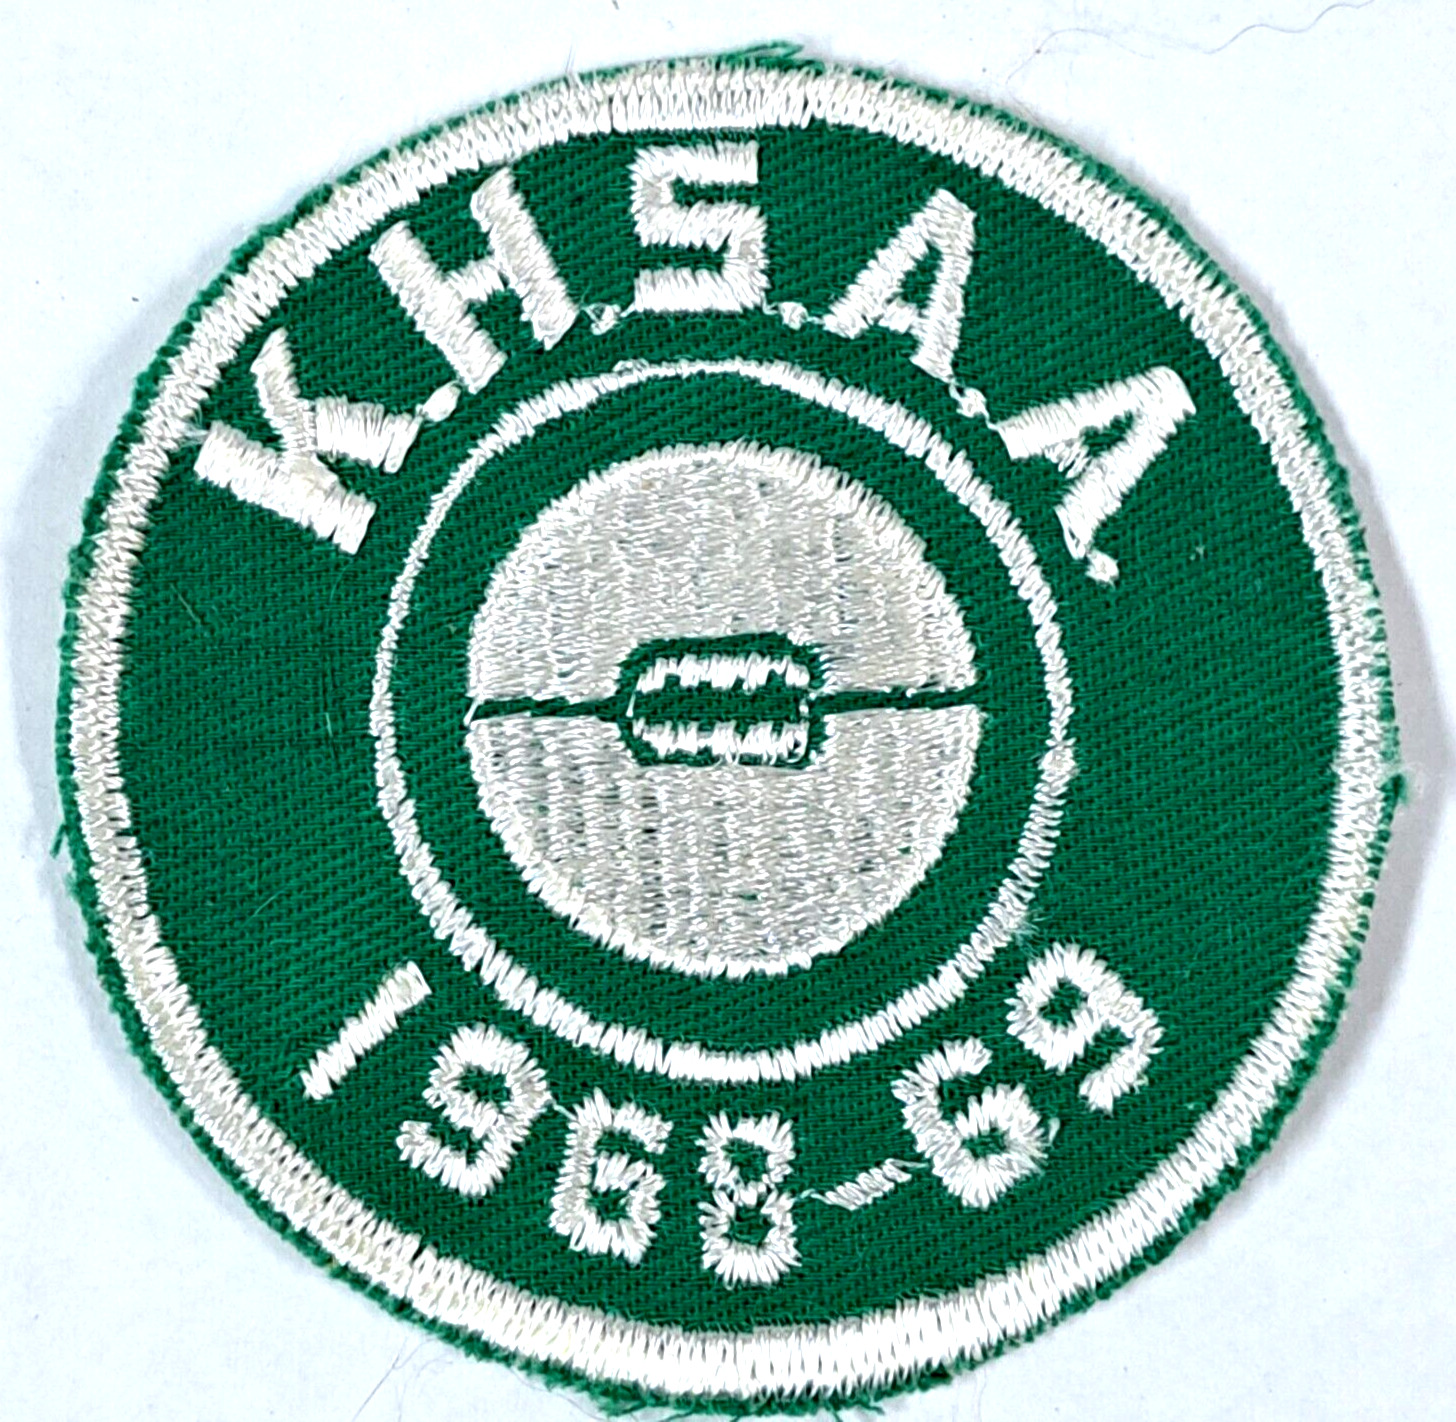 Vintage patch K.H.S.A.A. 1968-69 Kentucky High School Athletic Association